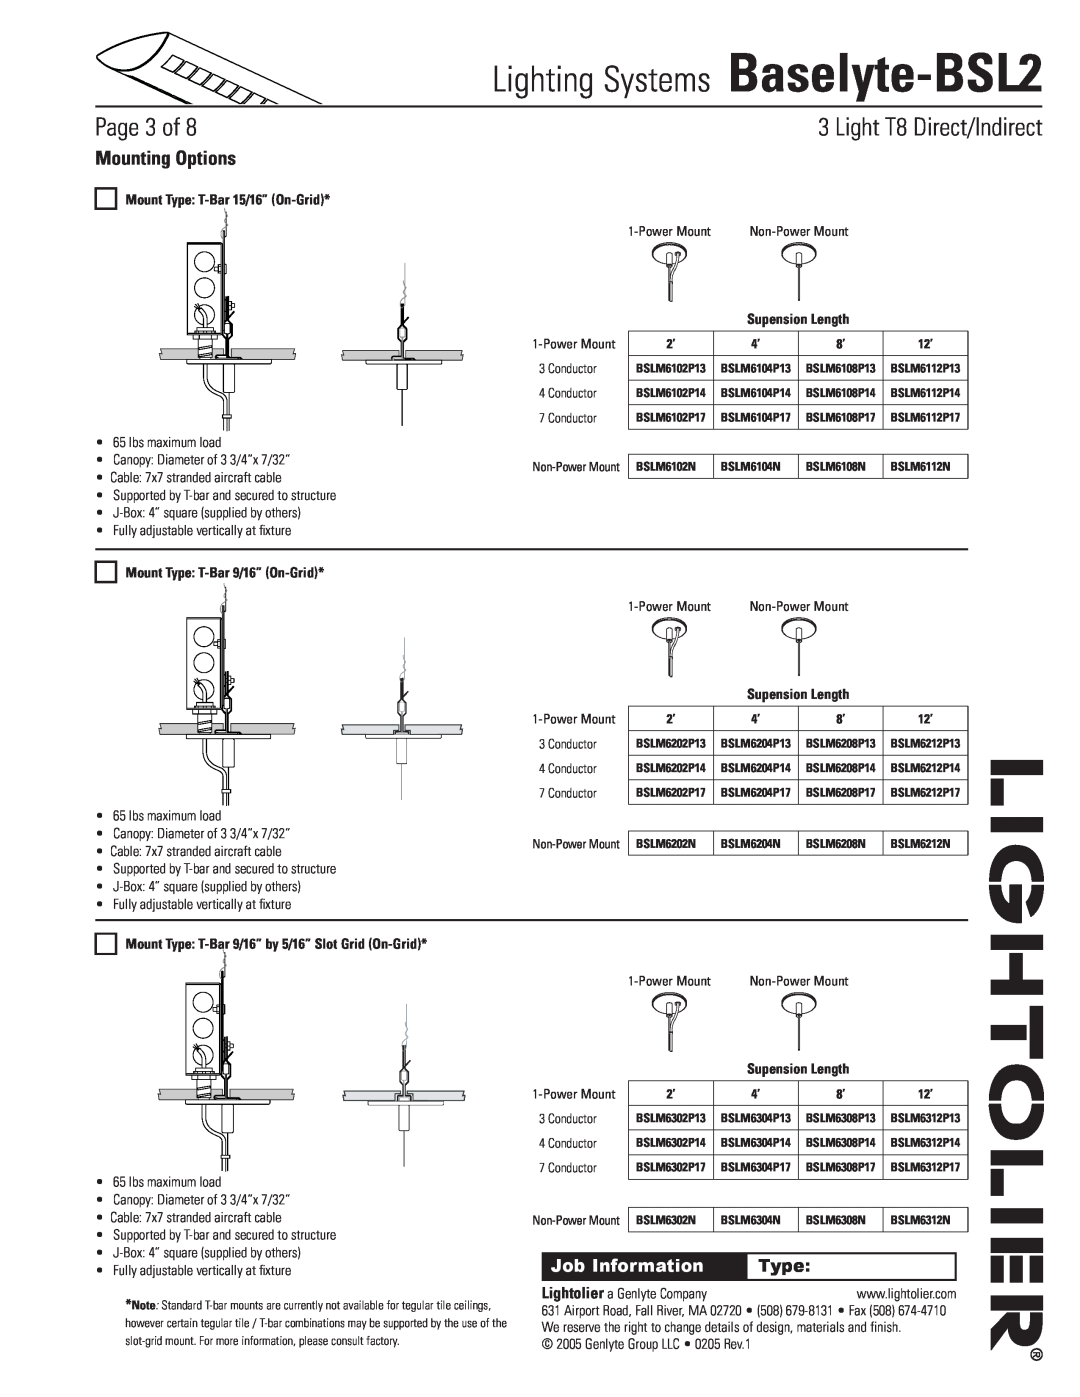 Lightolier Baselyte-BSL2 Mounting Options, Mount Type T-Bar15/16” On-Grid, Supension Length, Mount Type T-Bar9/16” On-Grid 